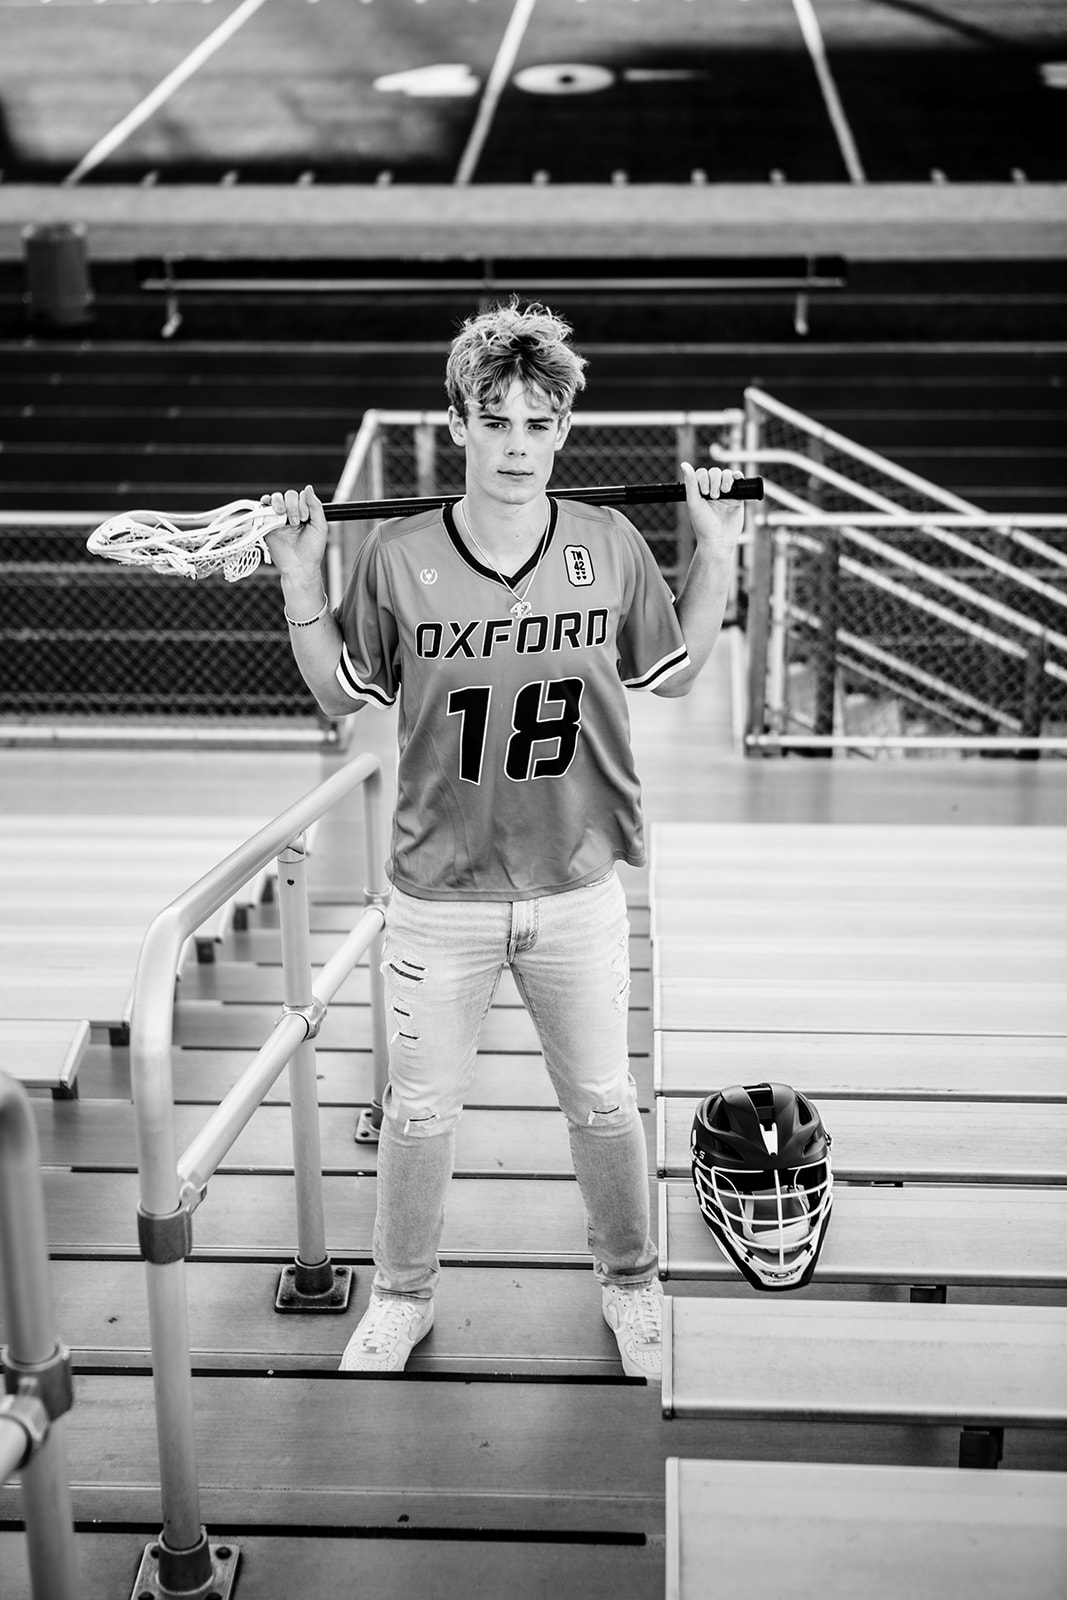 Logan posing with his lacrosse attire at the Oxford stadium